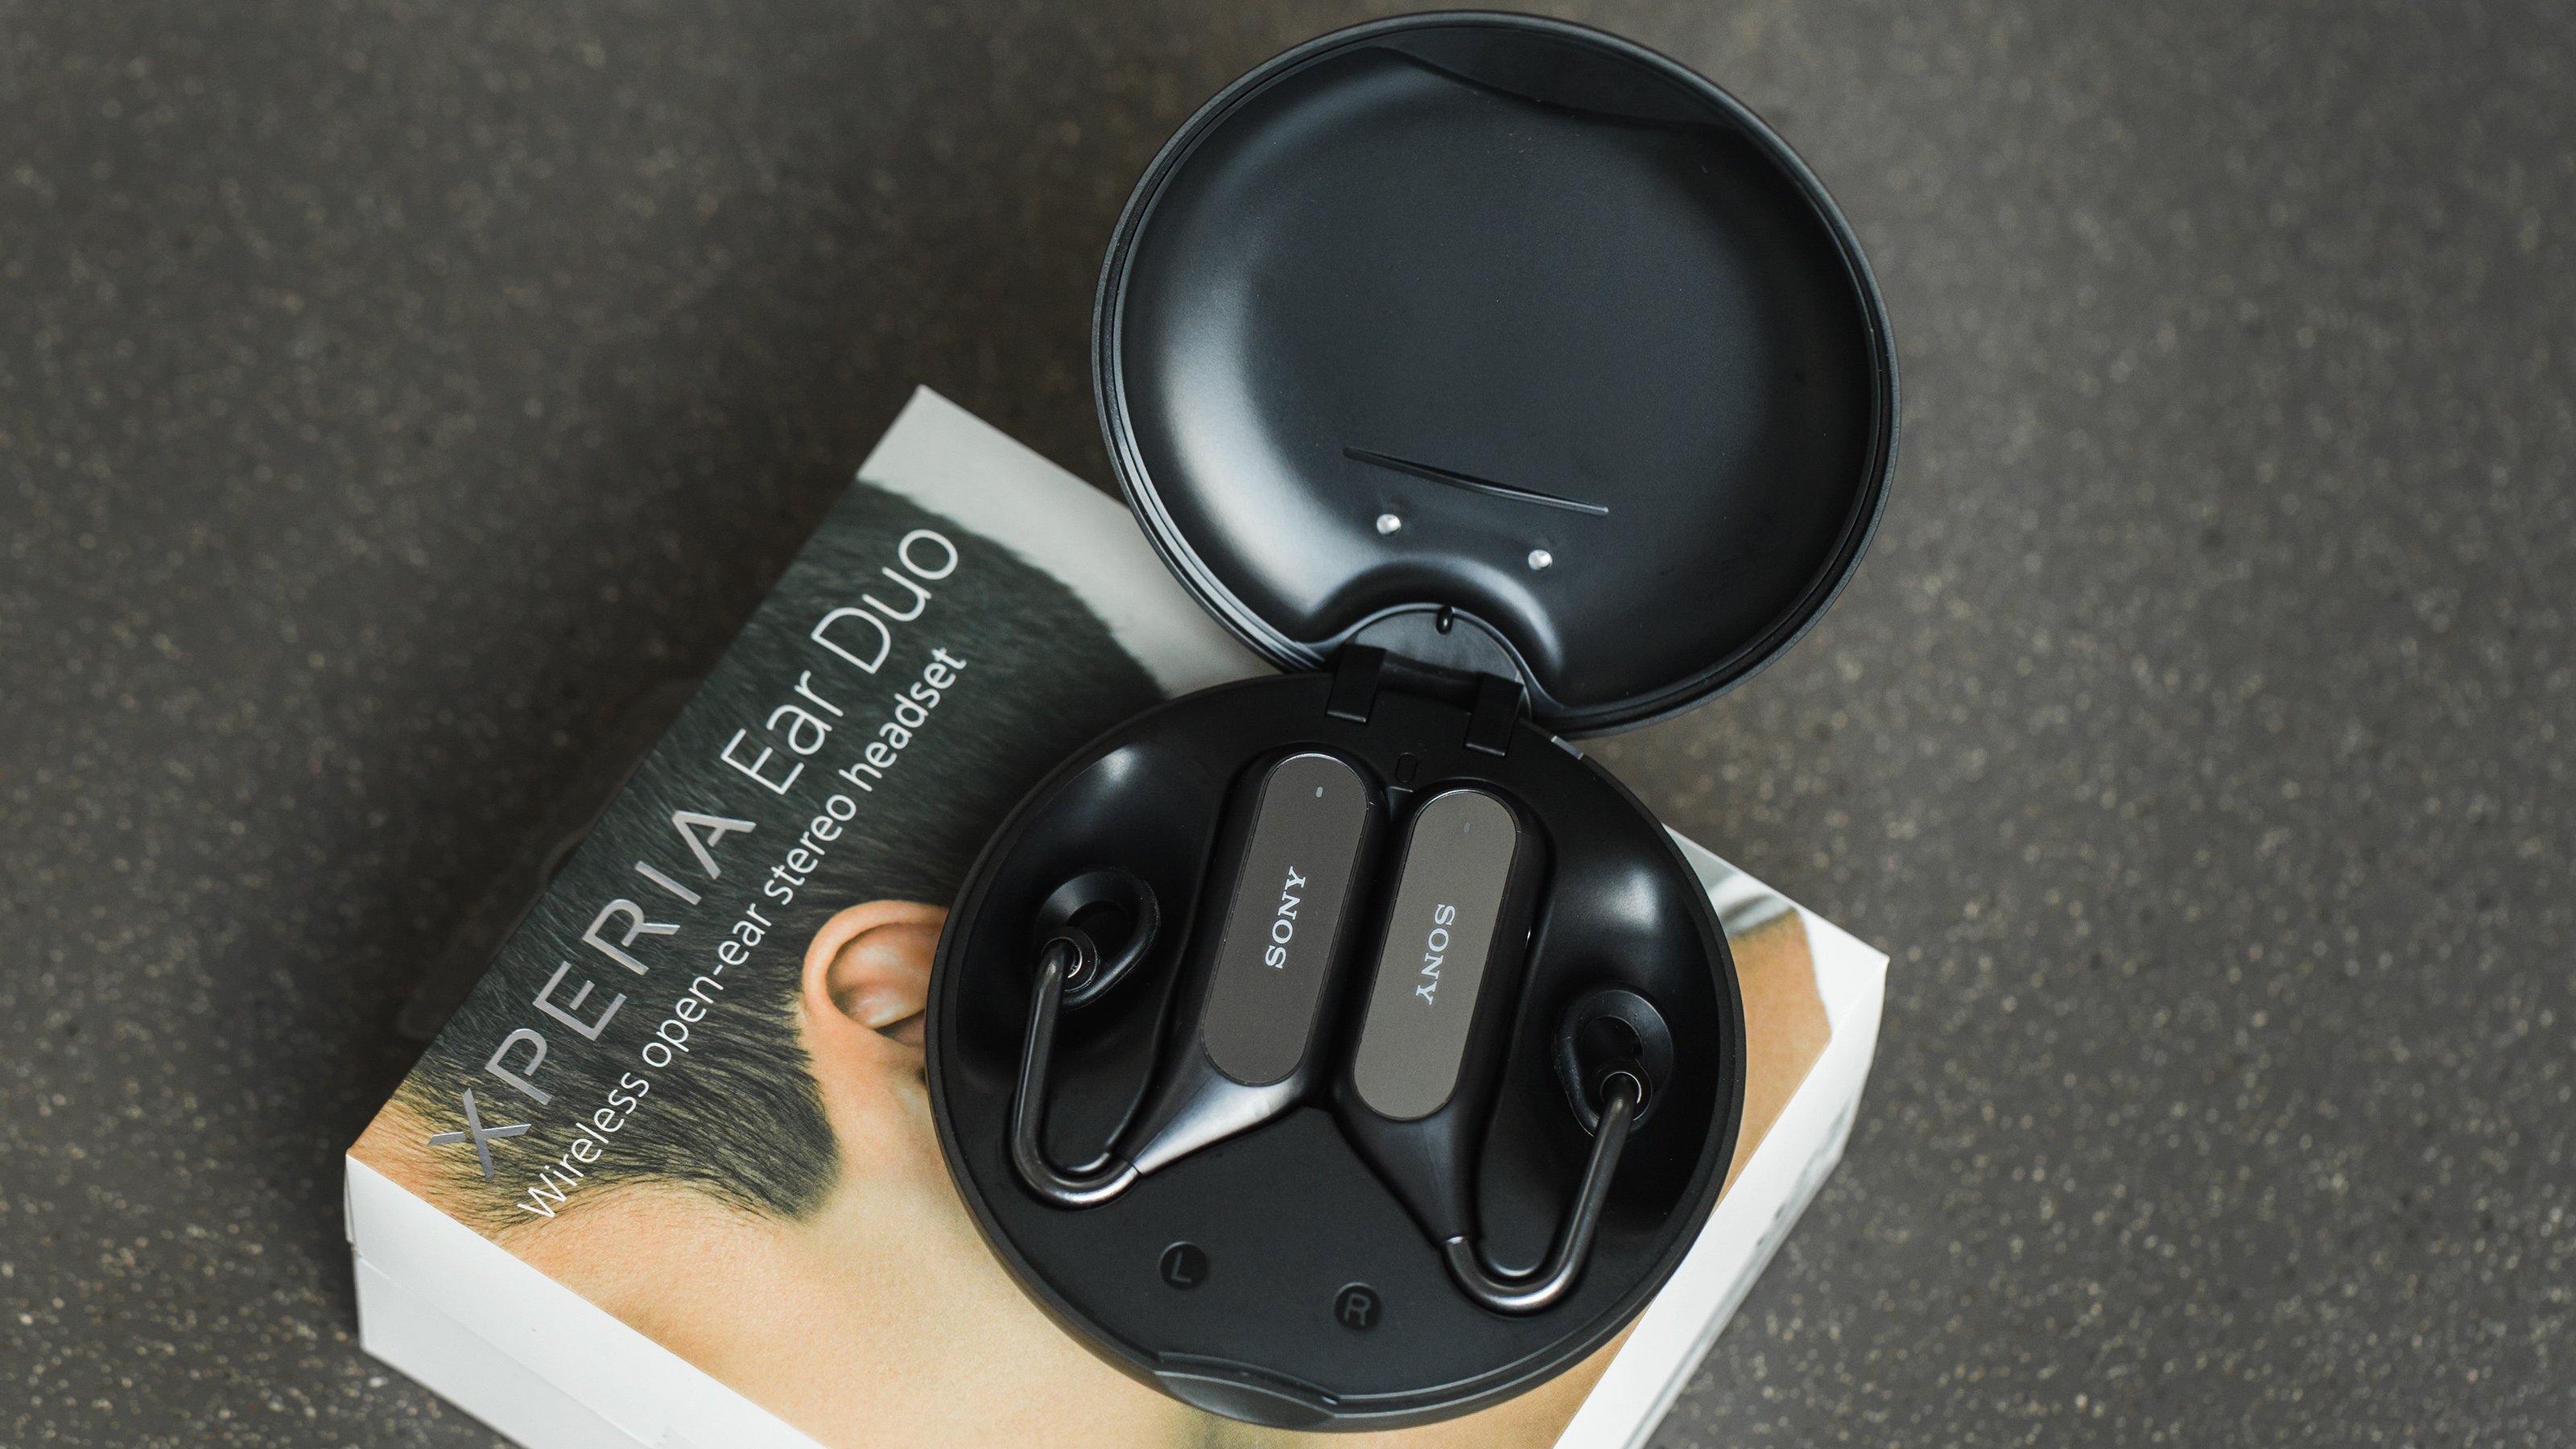 Sony Xperia Ear Duo: The unusual AirPod alternative | NextPit